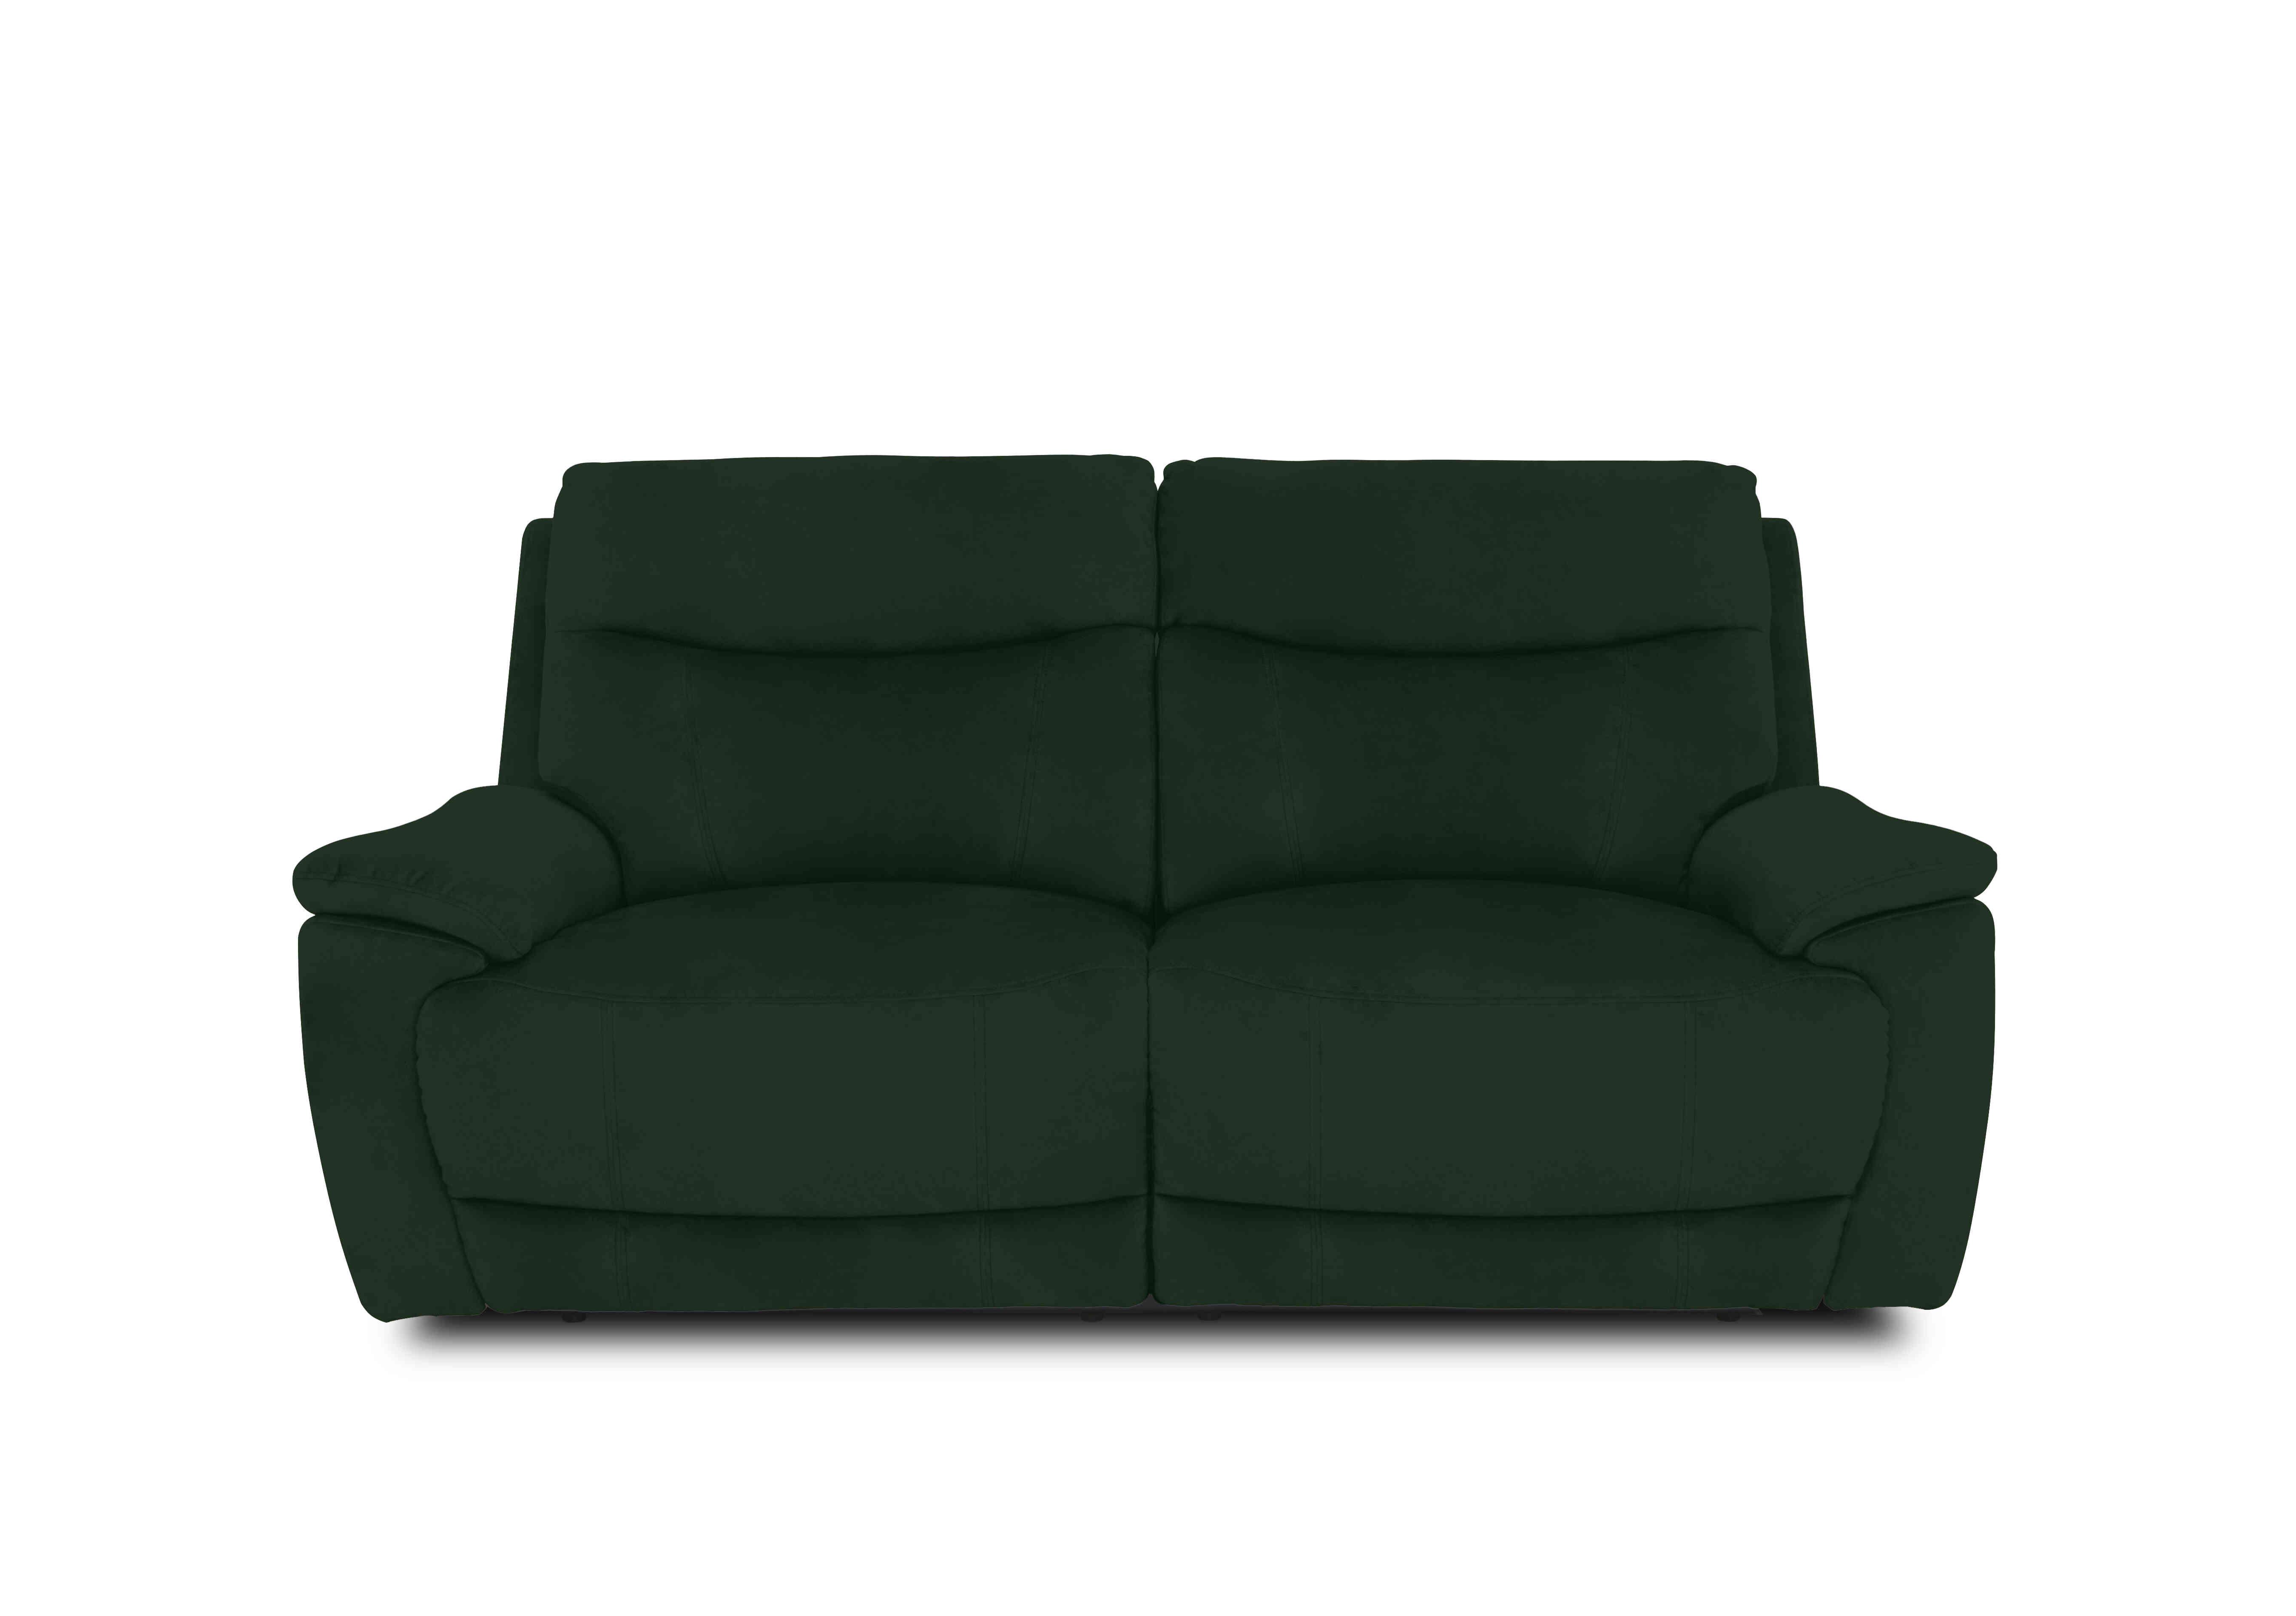 Sloane 3 Seater Fabric Sofa in 51011 Opulence Bottle Green on Furniture Village